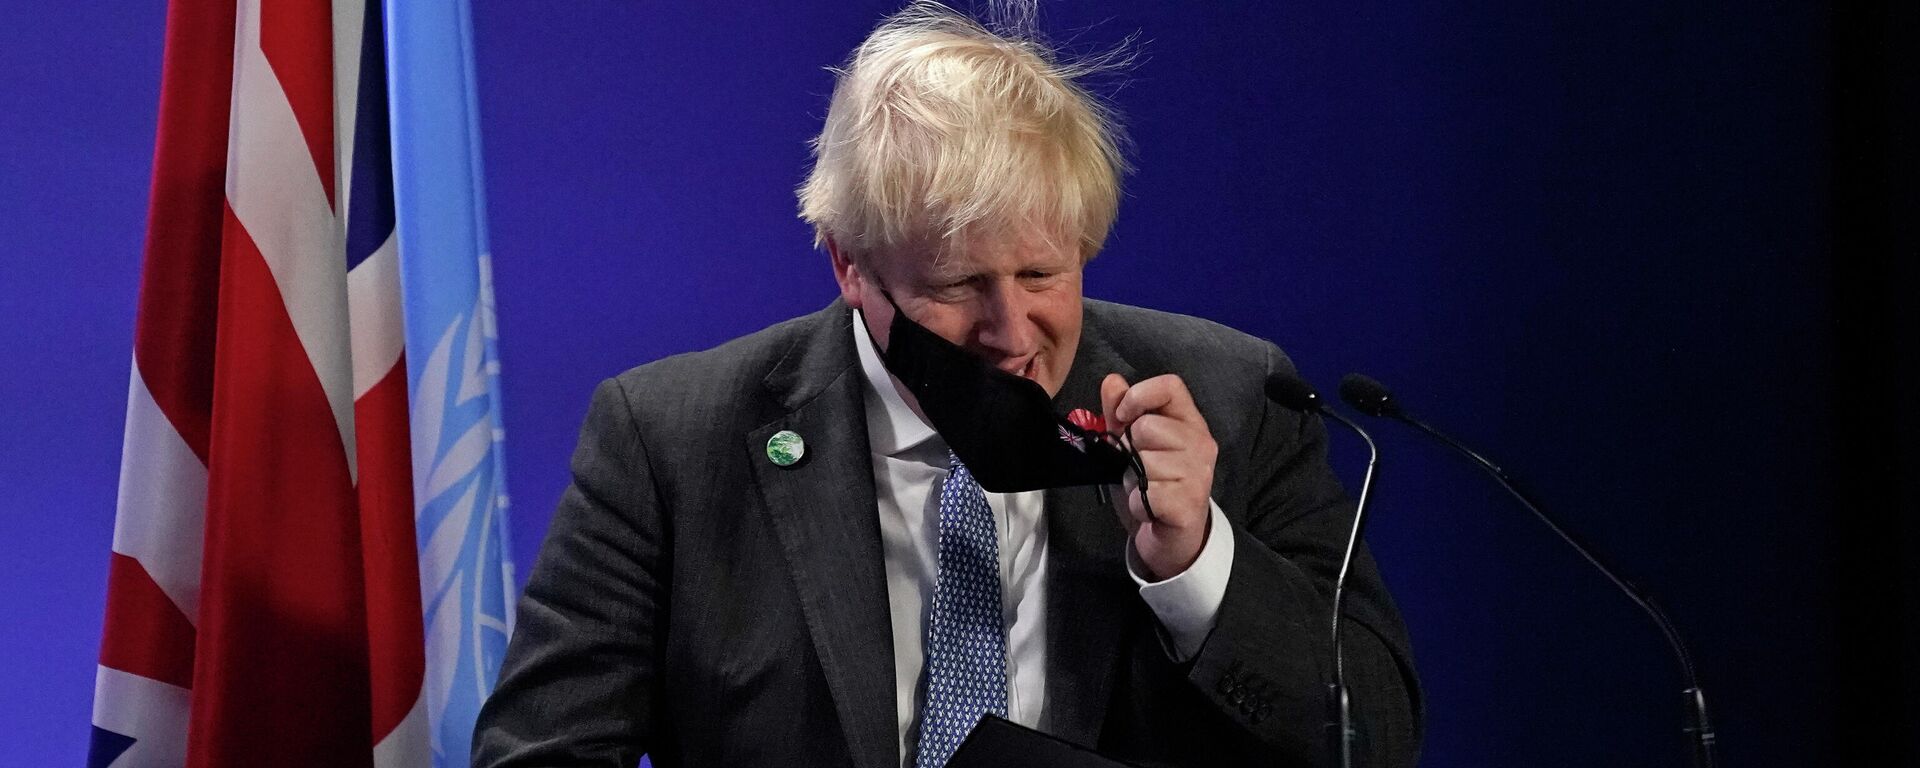 British Prime Minister Boris Johnson takes off his mask as he prepares to speak at the COP26 U.N. Climate Summit, in Glasgow, Scotland, Tuesday, Nov. 2, 2021 - Sputnik International, 1920, 03.11.2021